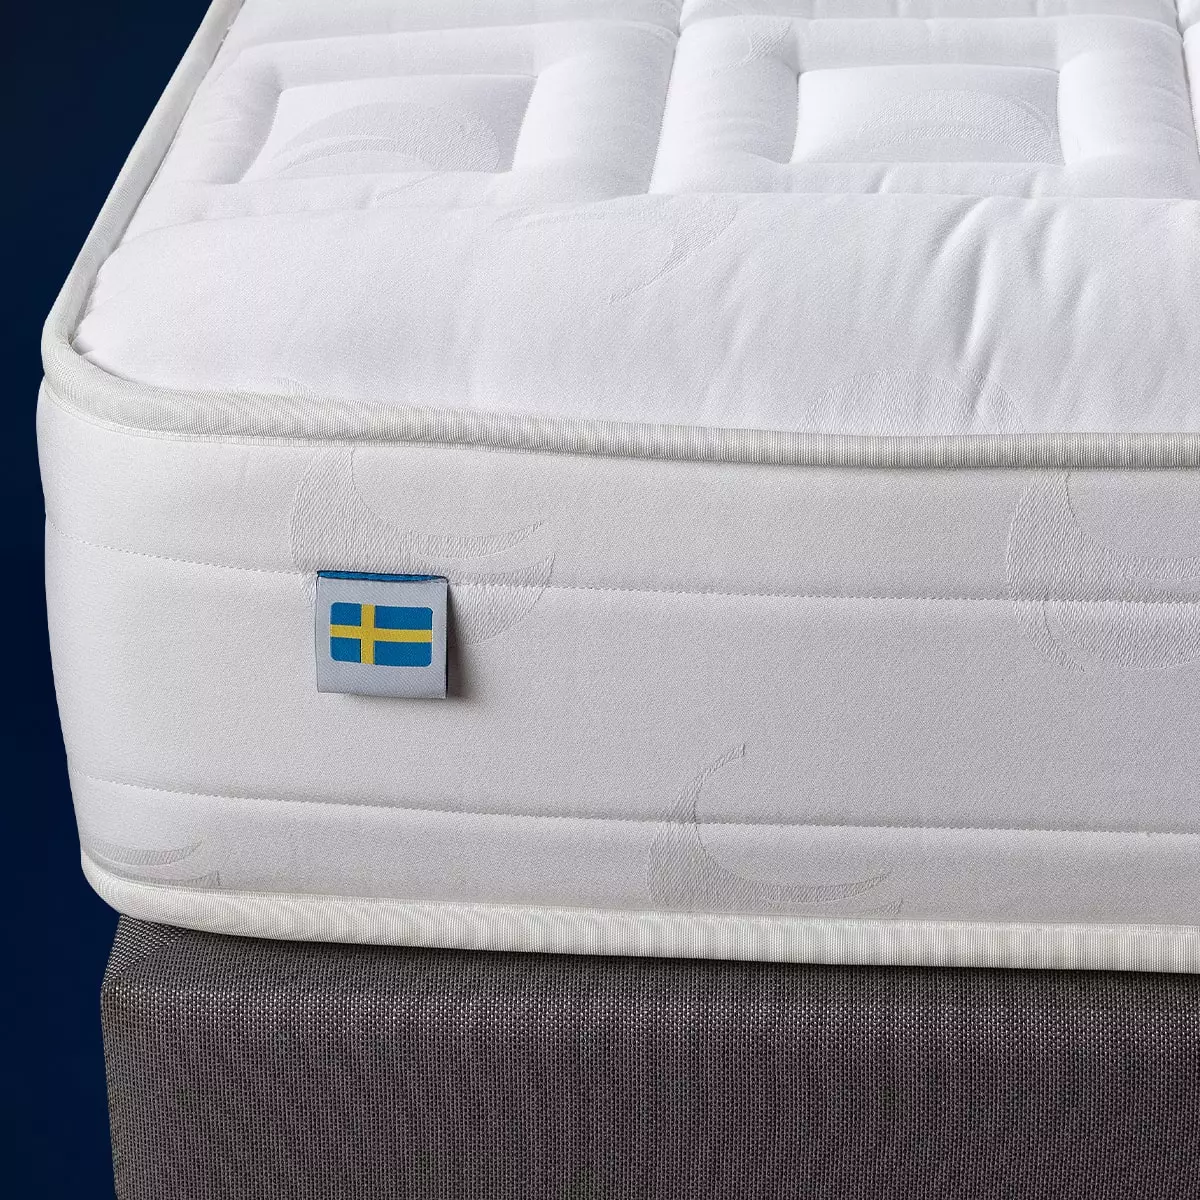 Hälsa Jönköpings Yatak | Kaset Pamuk Dolgu Paket Yay Sistemi doğal yatak